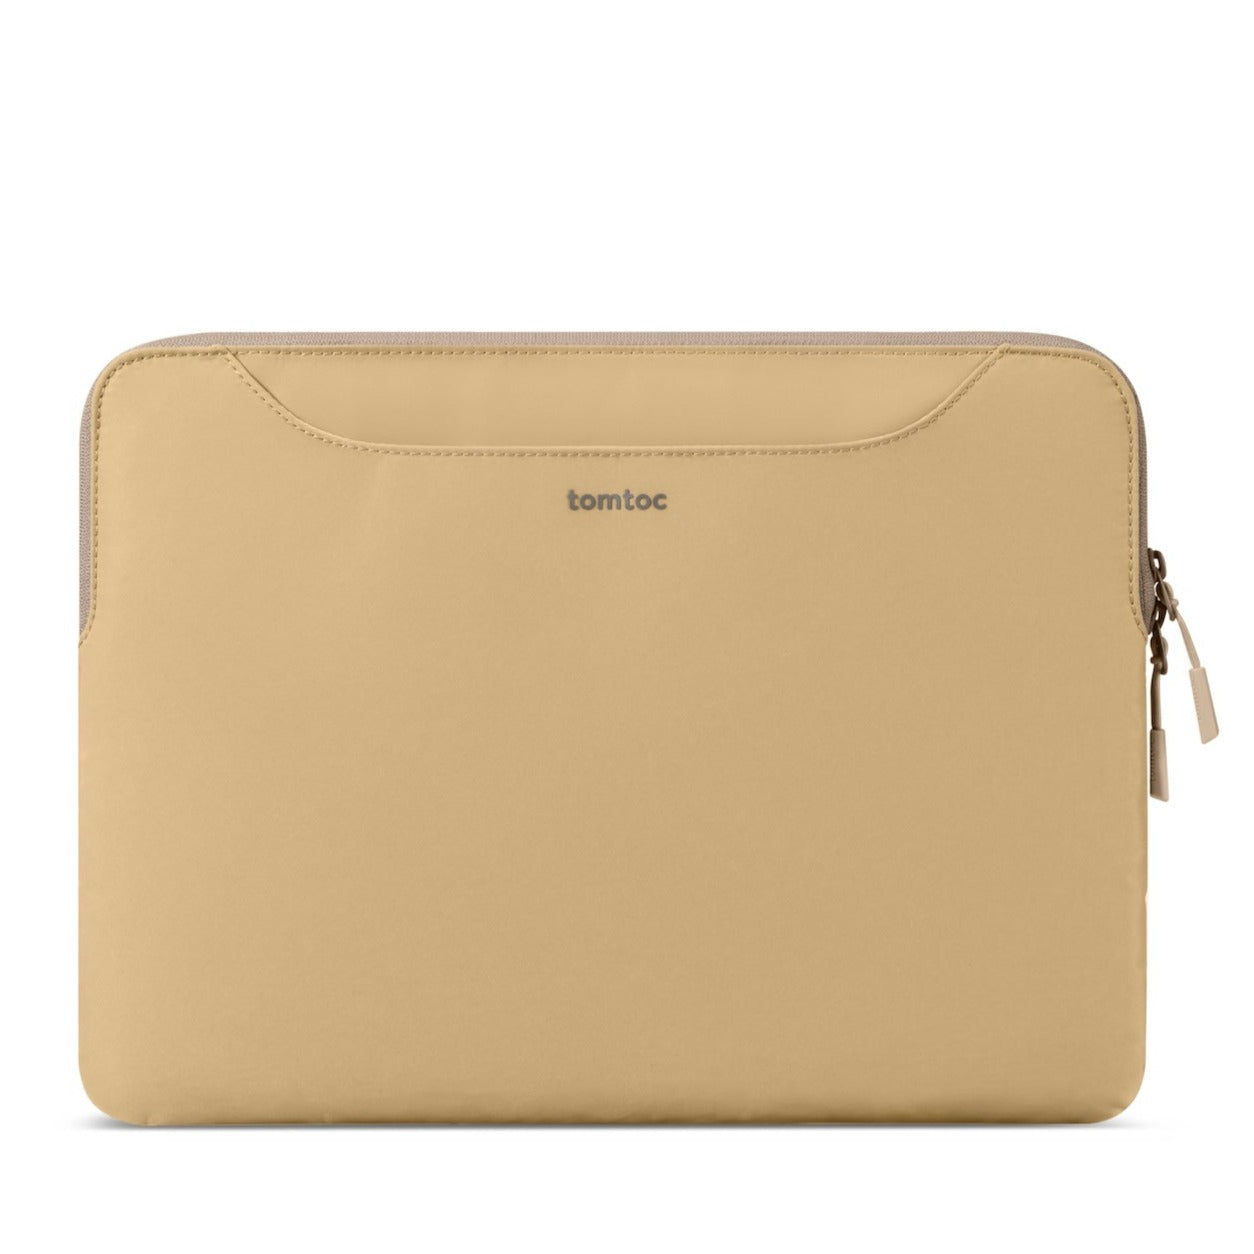 tomtoc Light-A21 Dual-color Slim Laptop Handbag - 13.5inch